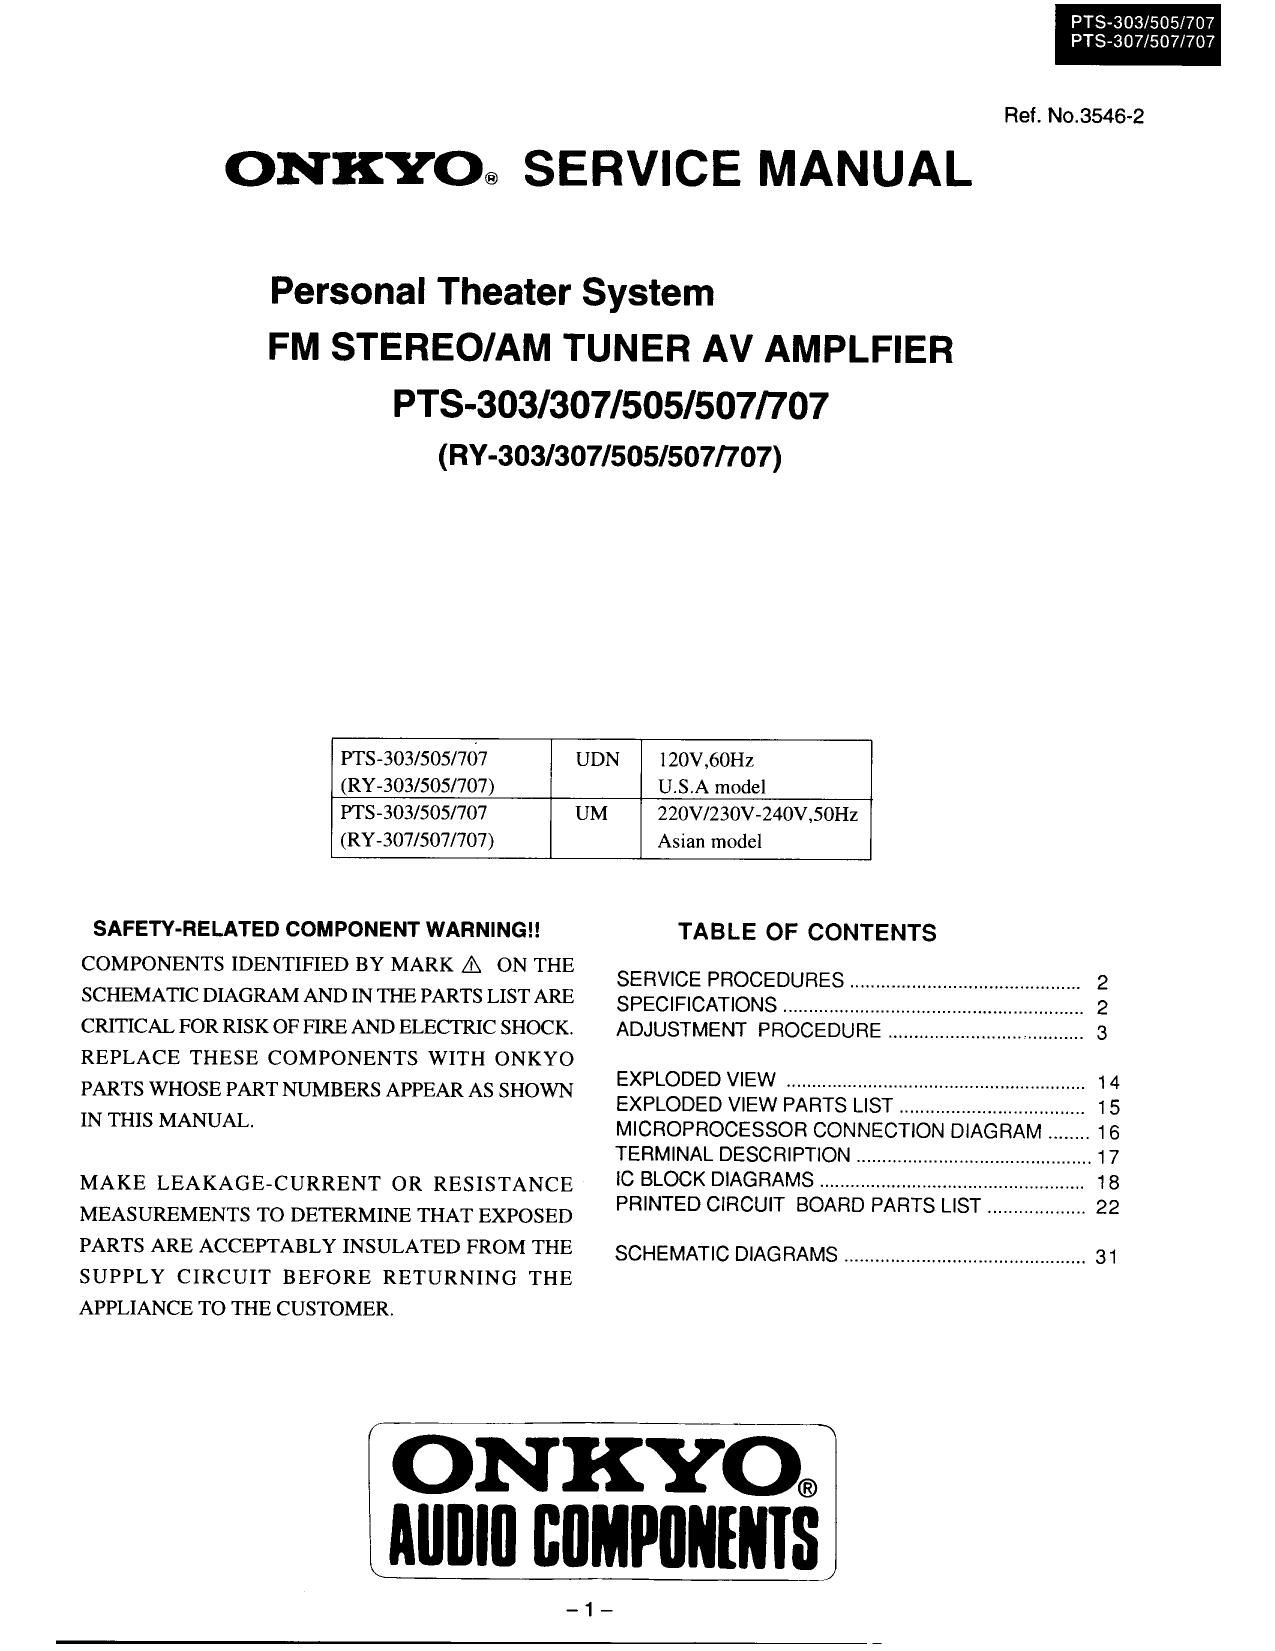 Onkyo RY 303 Service Manual